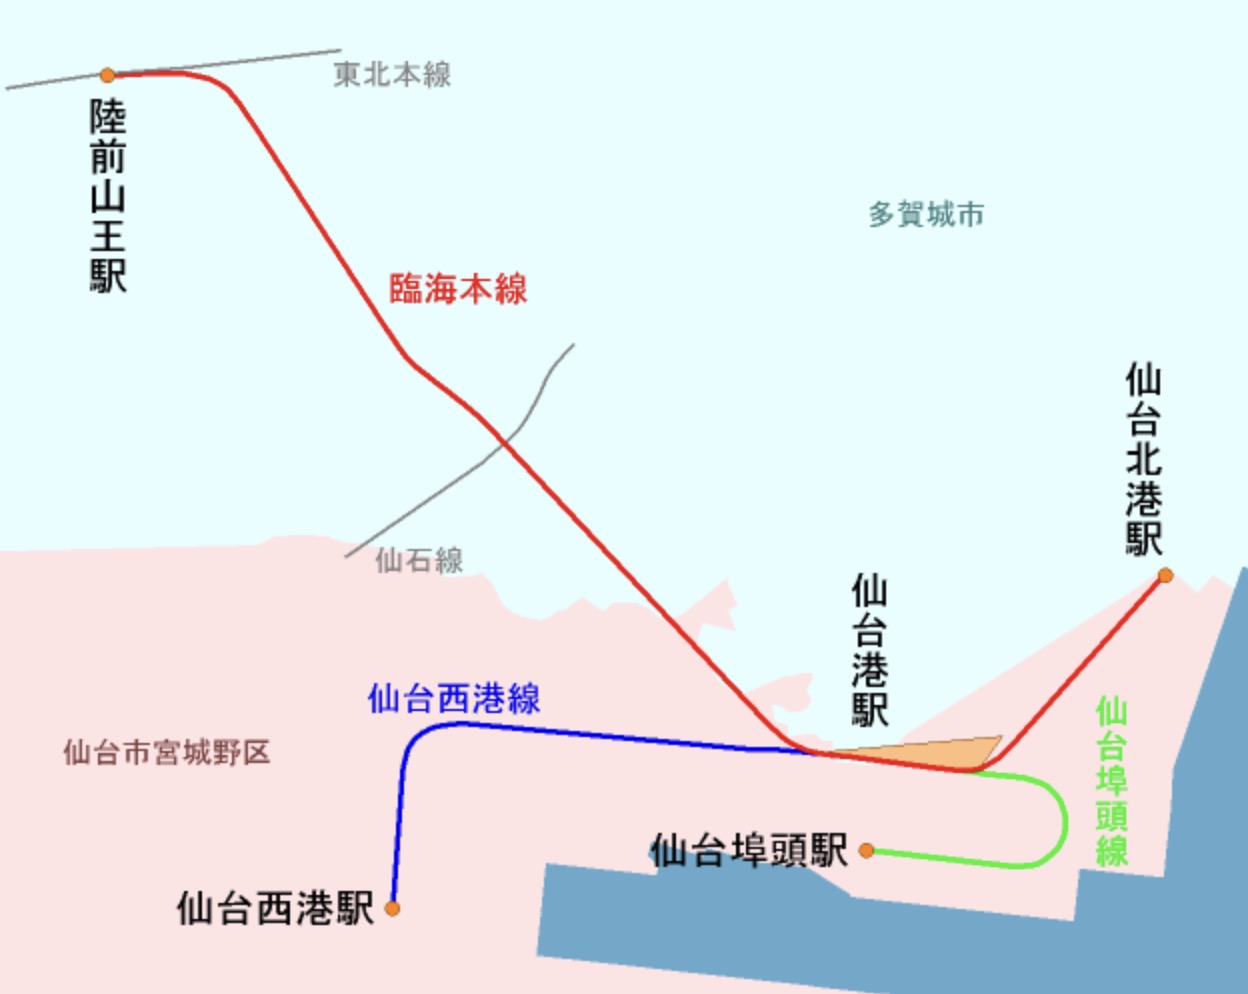 Transportation Company - Sendai Rinkai - Railroad